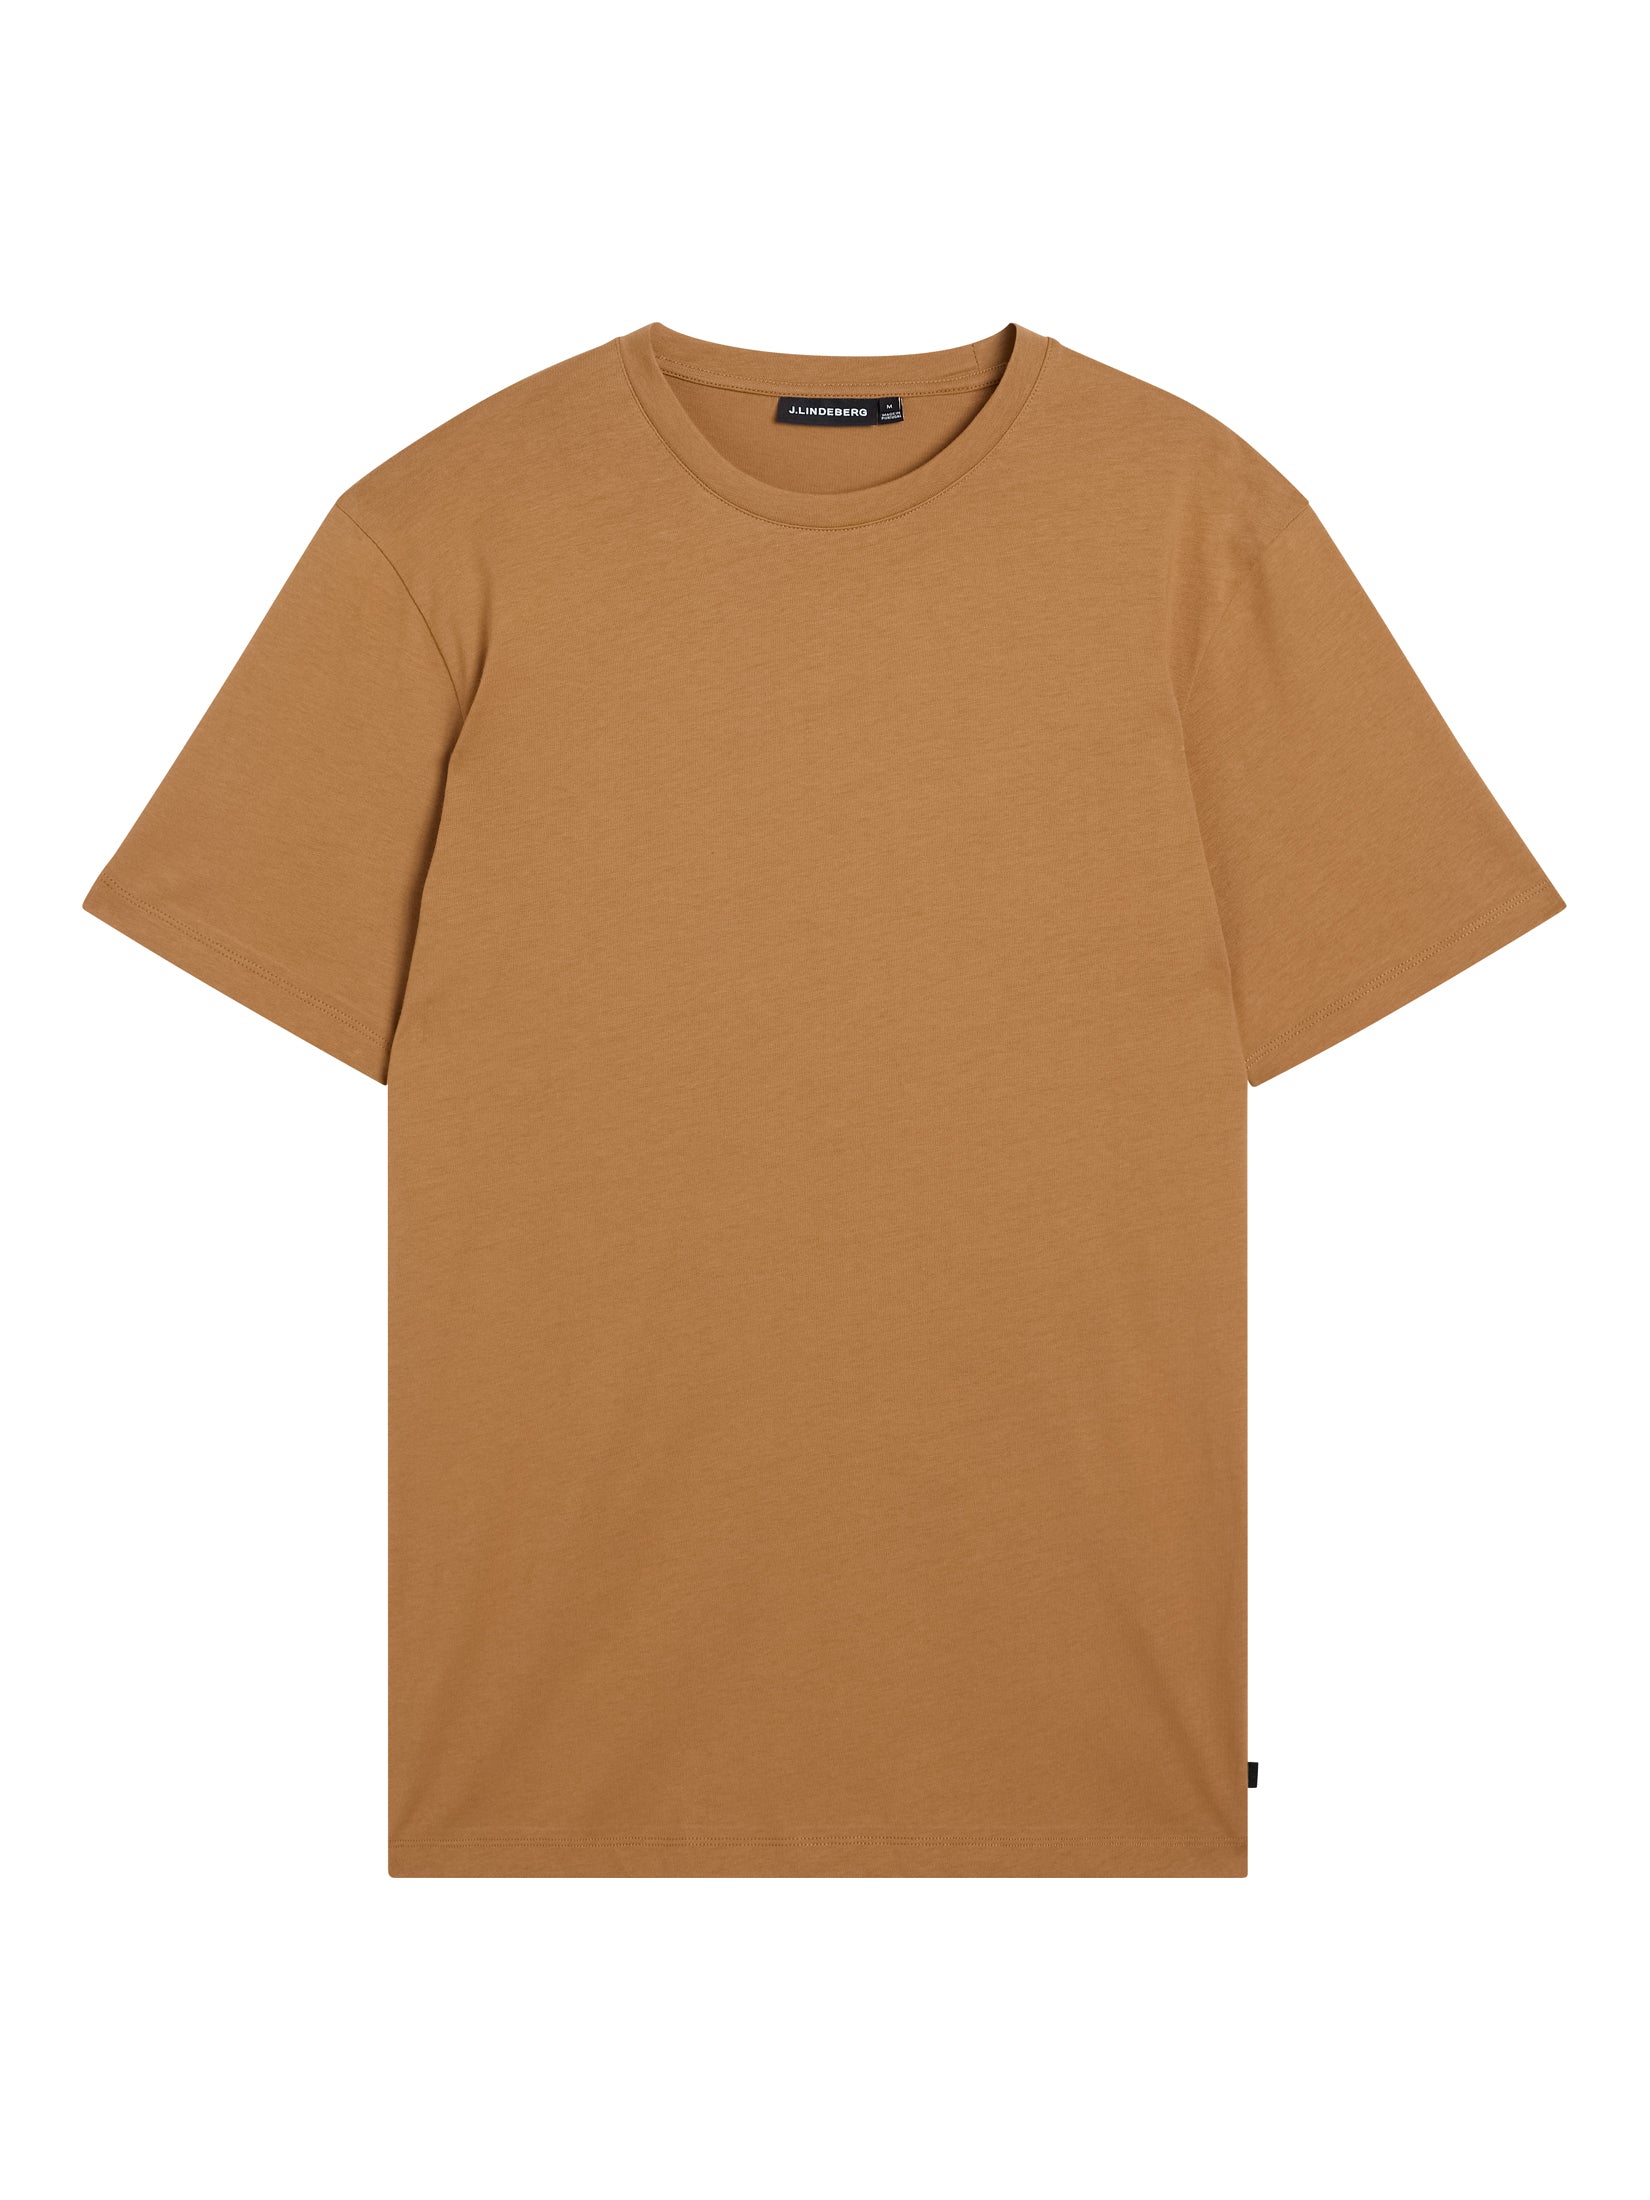 Sid Basic T-Shirt Brown